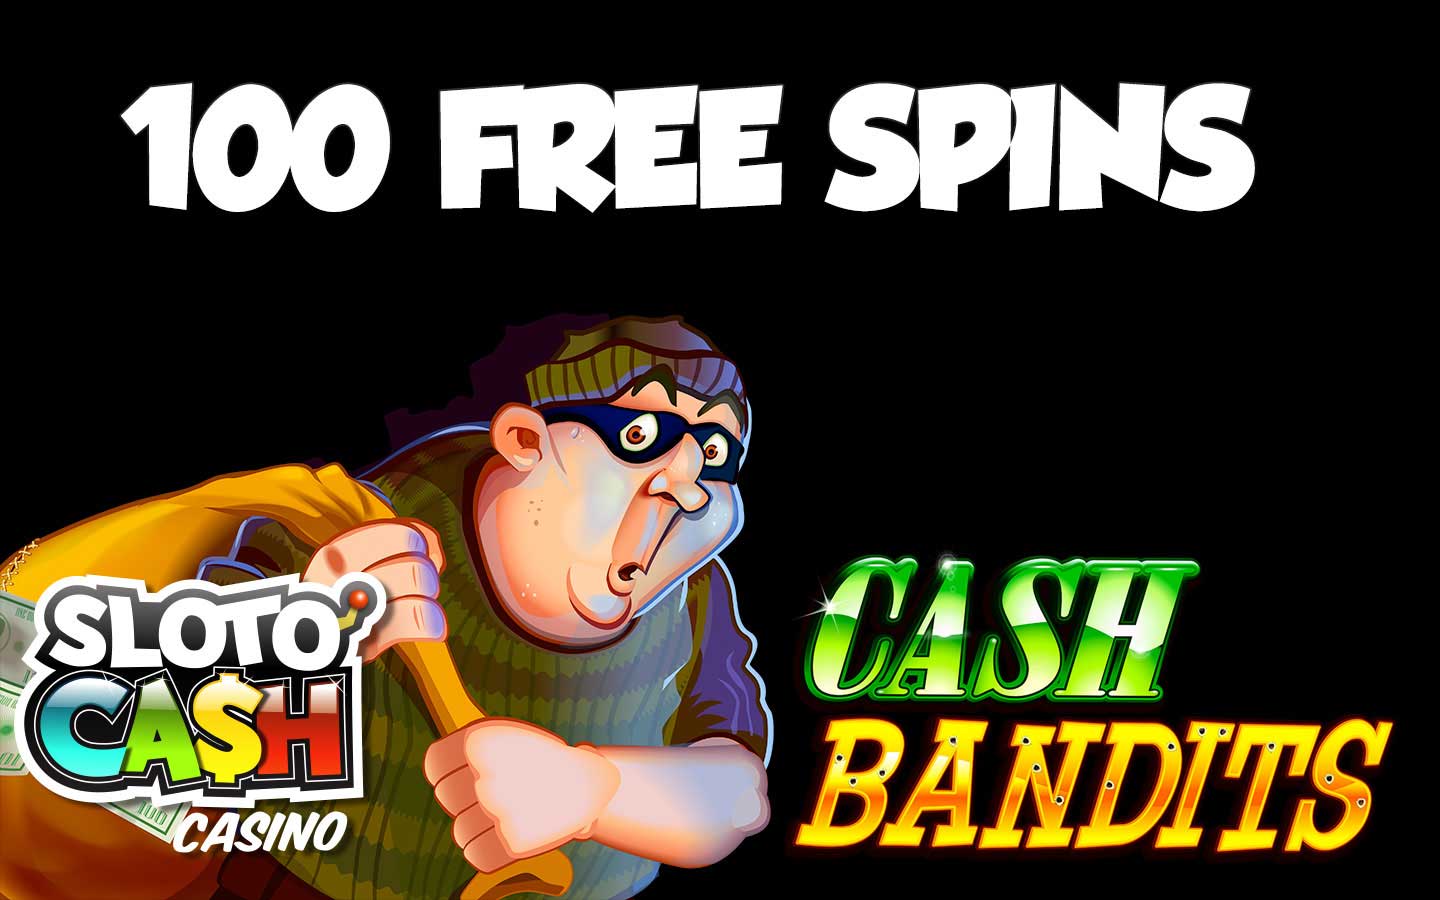 SlotoCash casino free spins promo